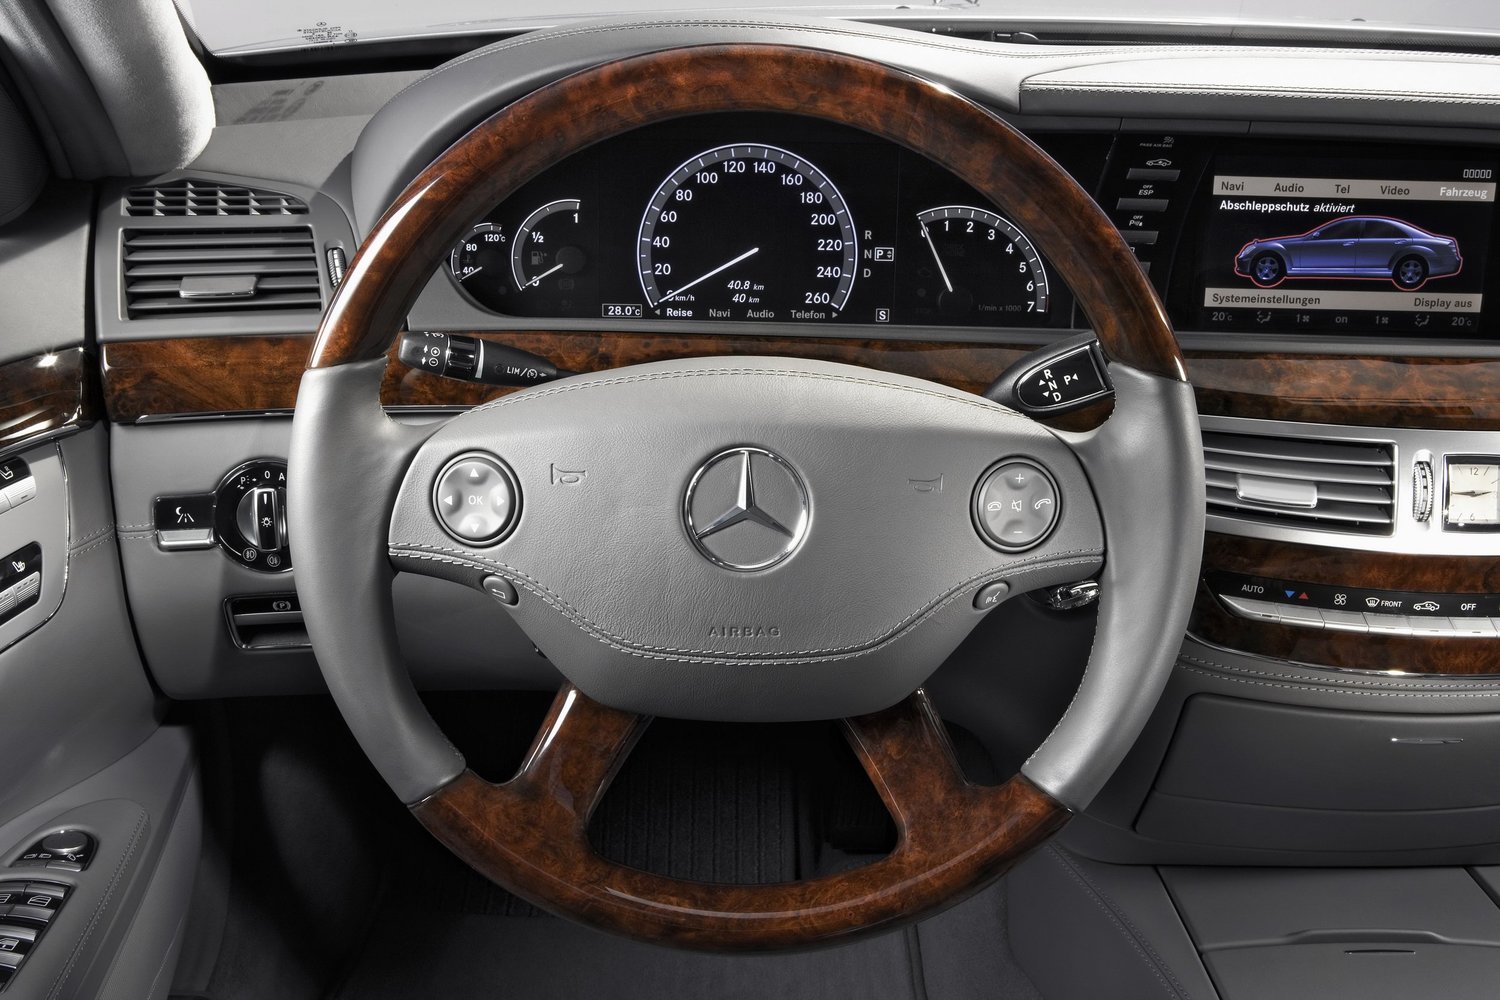 седан Mercedes-Benz S-klasse 2005 - 2009г выпуска модификация 3.0 AT (235 л.с.)